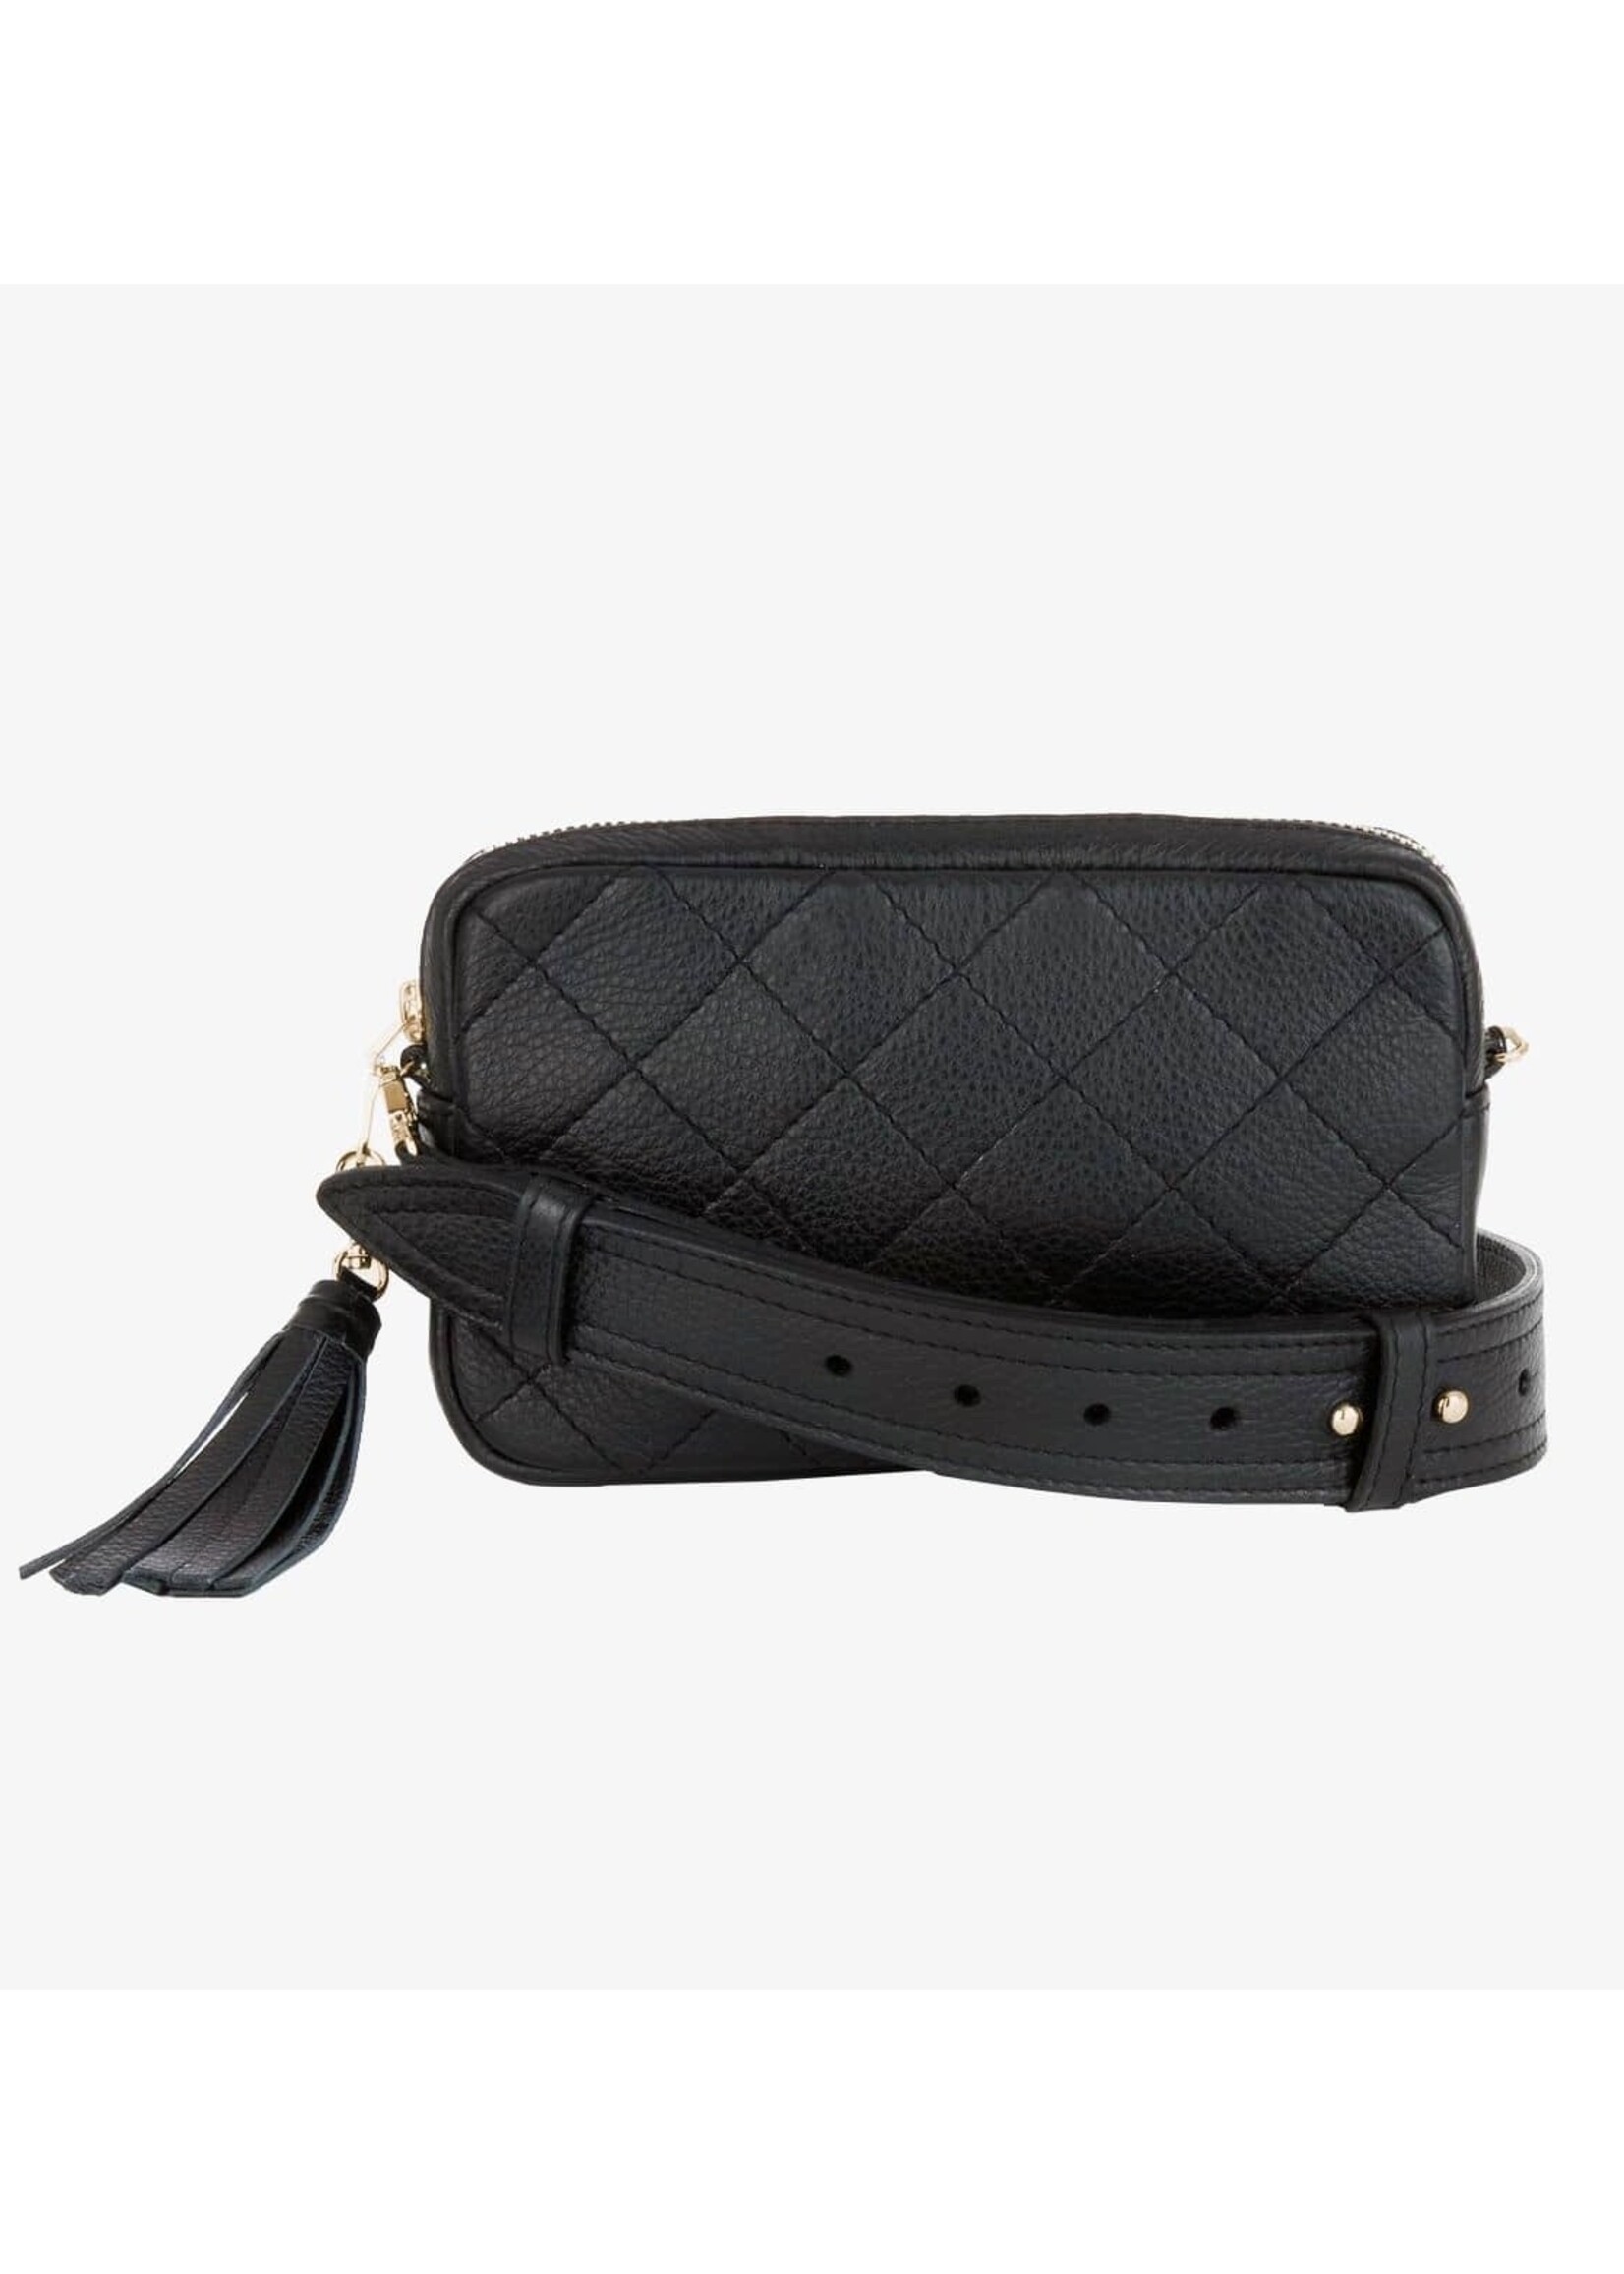 BRAVE LEATHER VIITORIA Leather Crossbody  Bag